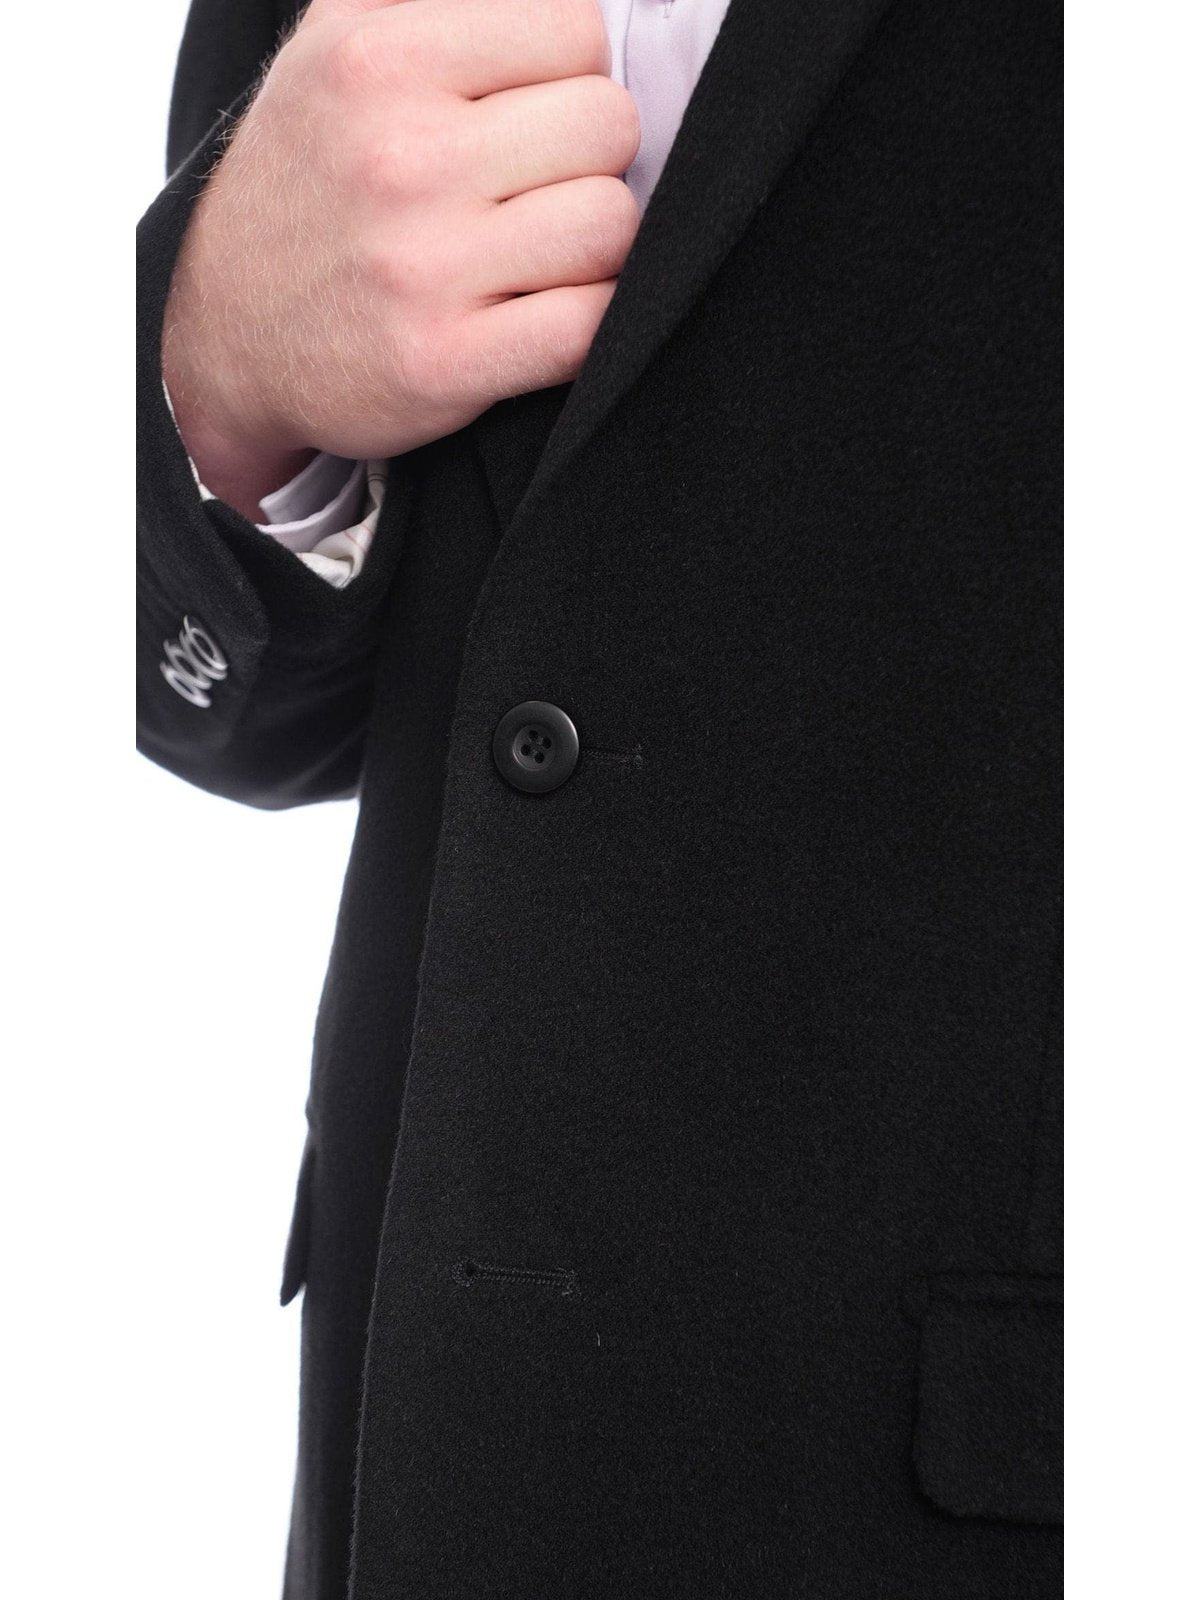 Prontomoda BLAZERS Prontomoda Classic Fit Solid Black Lambs Wool Cashmere Blend Blazer Sportcoat